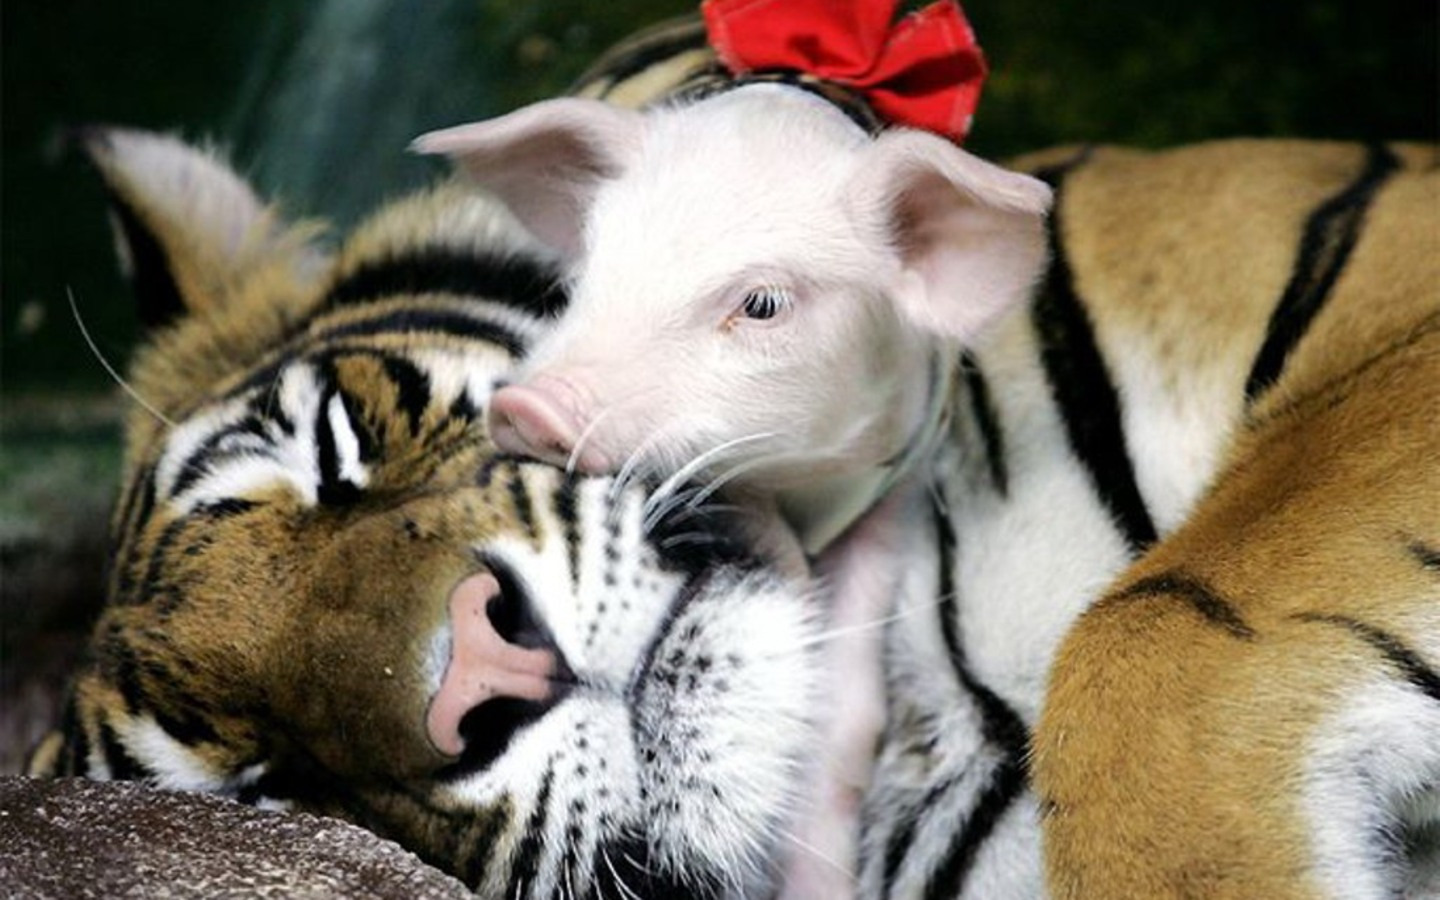 Baby Pig on Mom Tiger